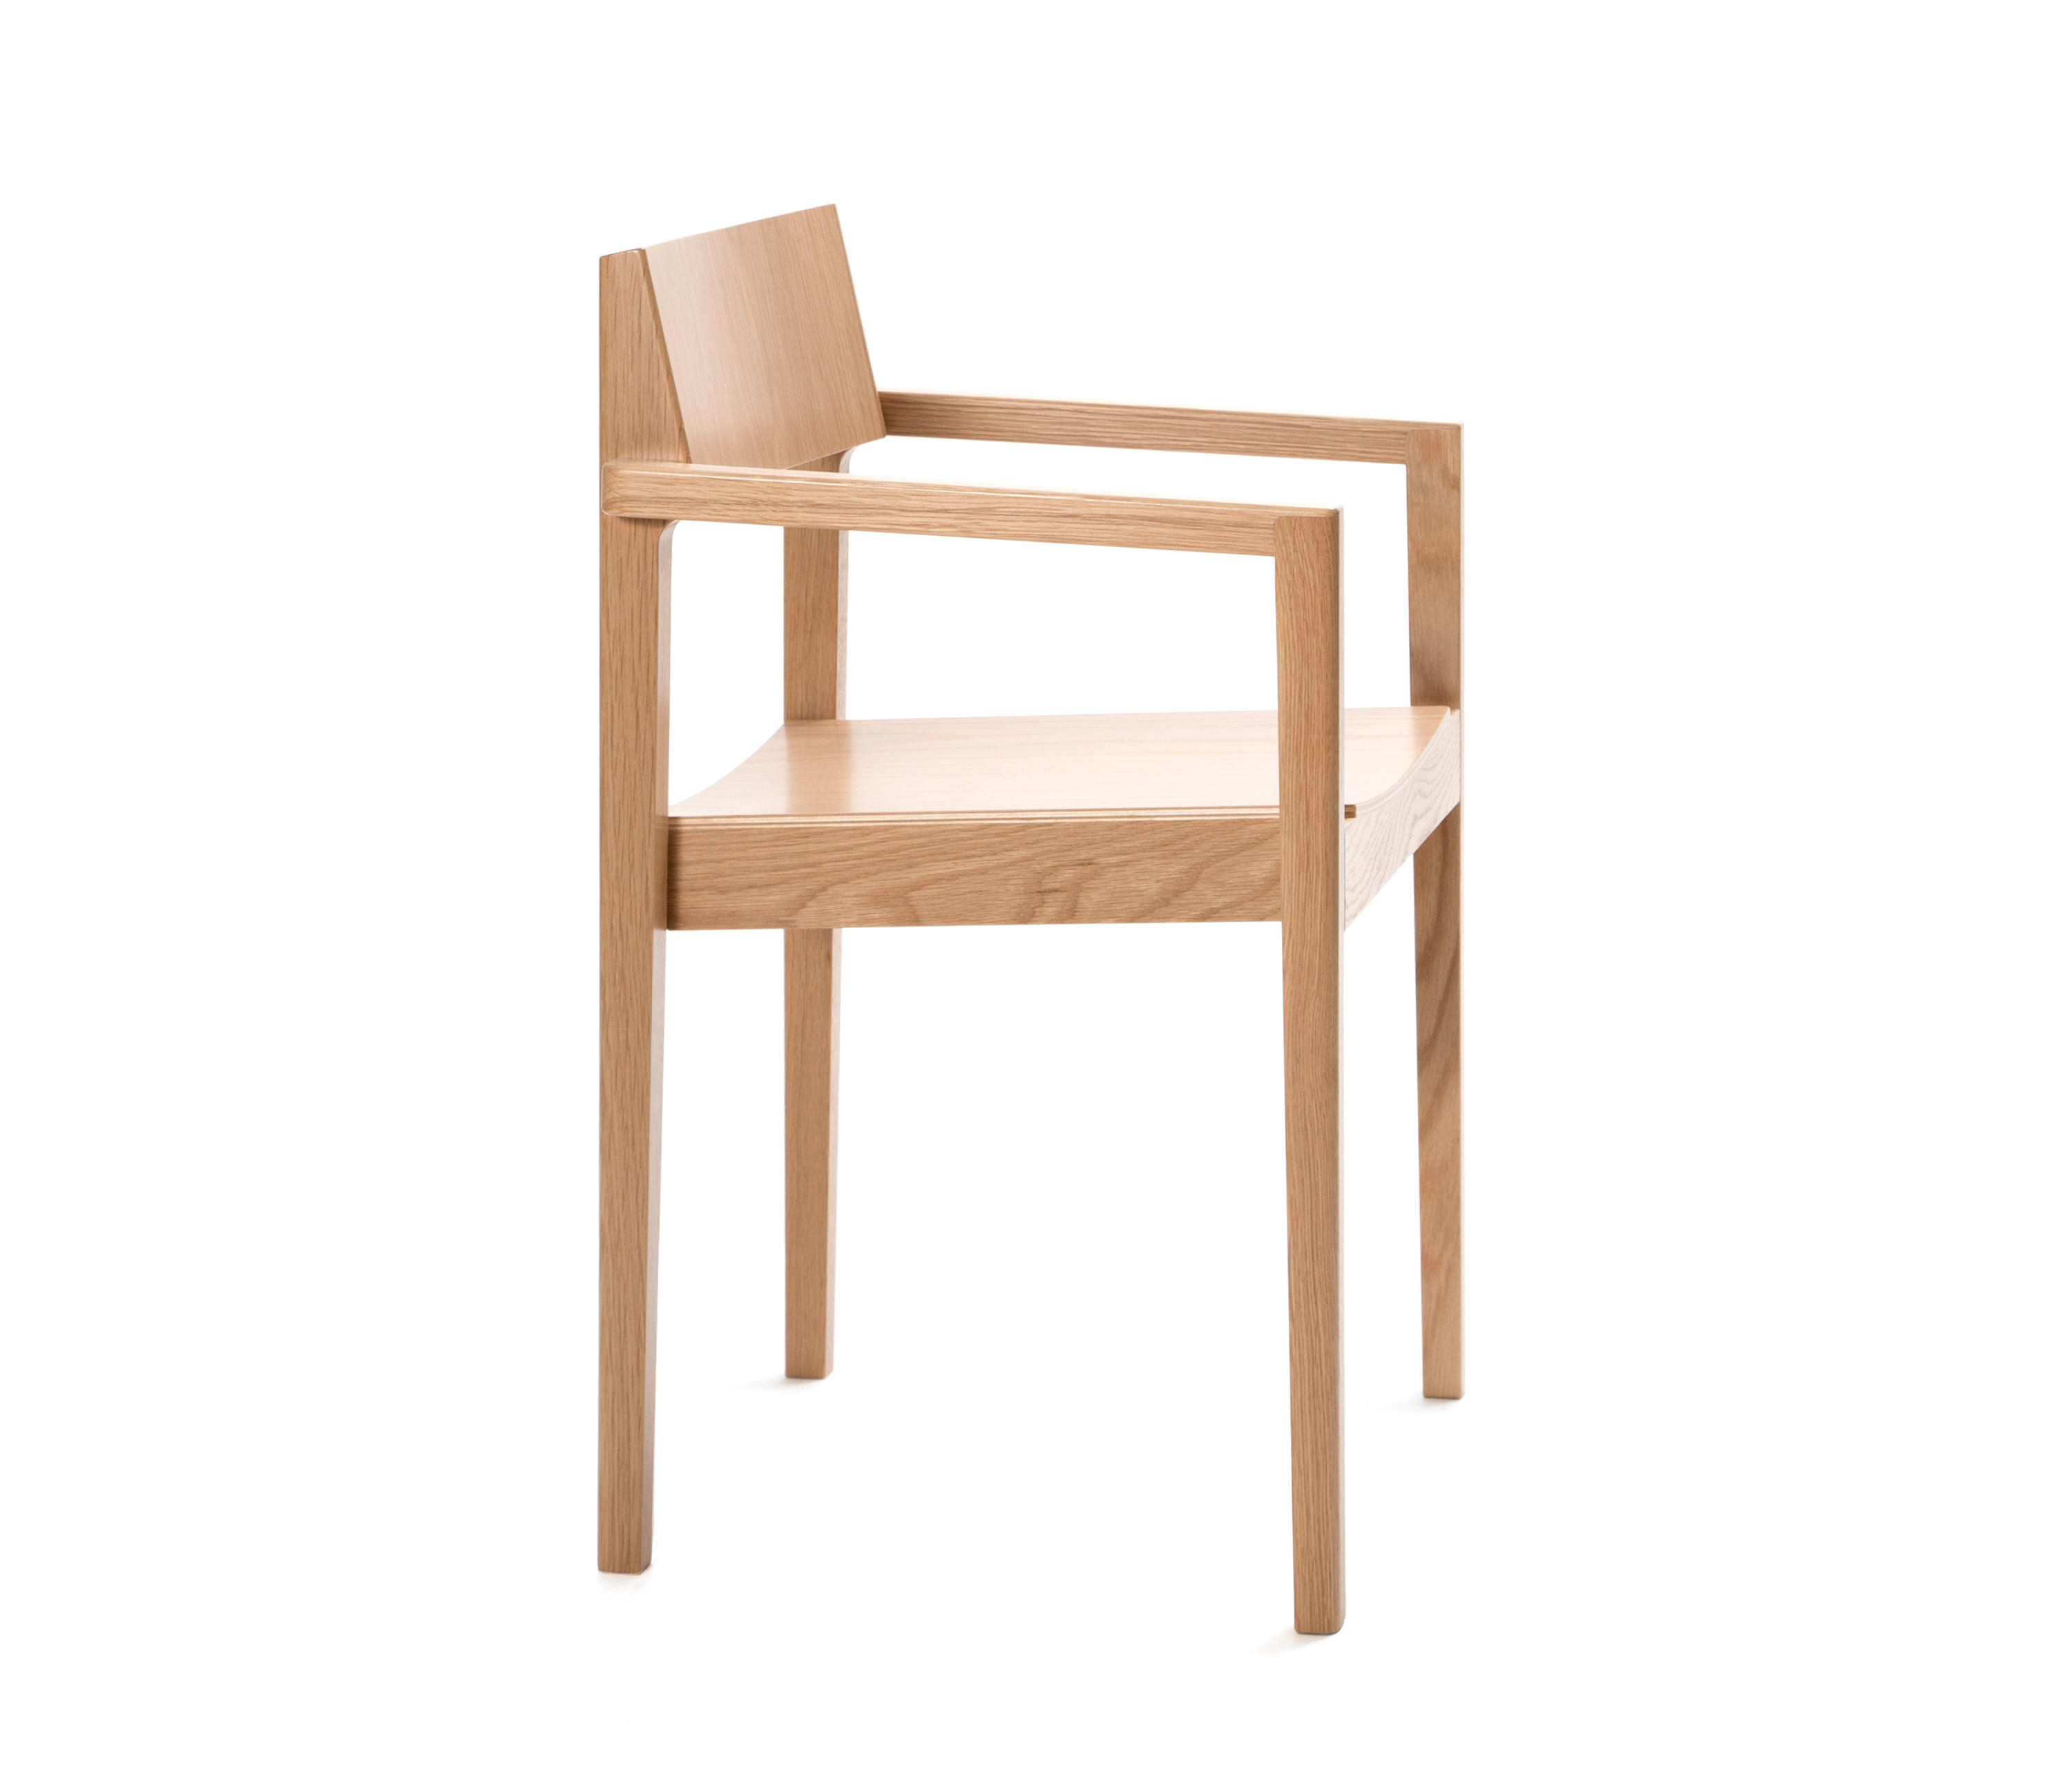 Intro with armrest & designer furniture | Architonic